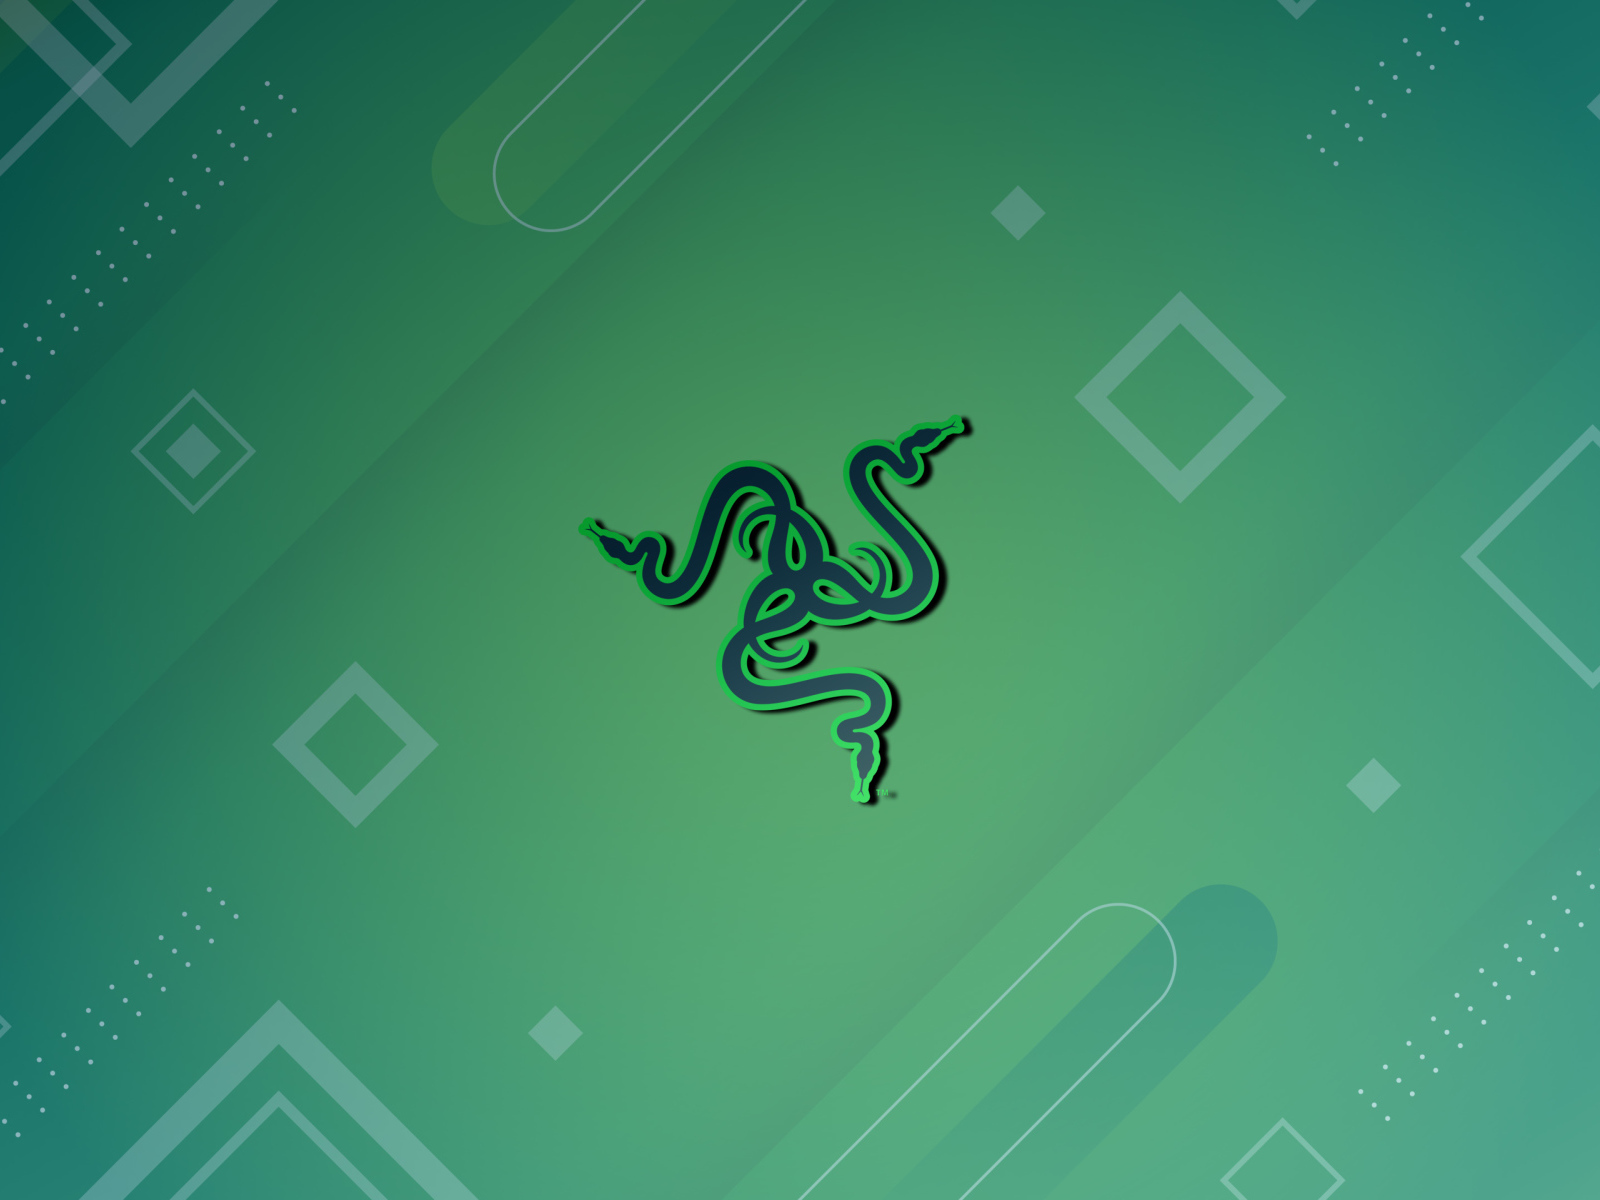 Razer logo on green background